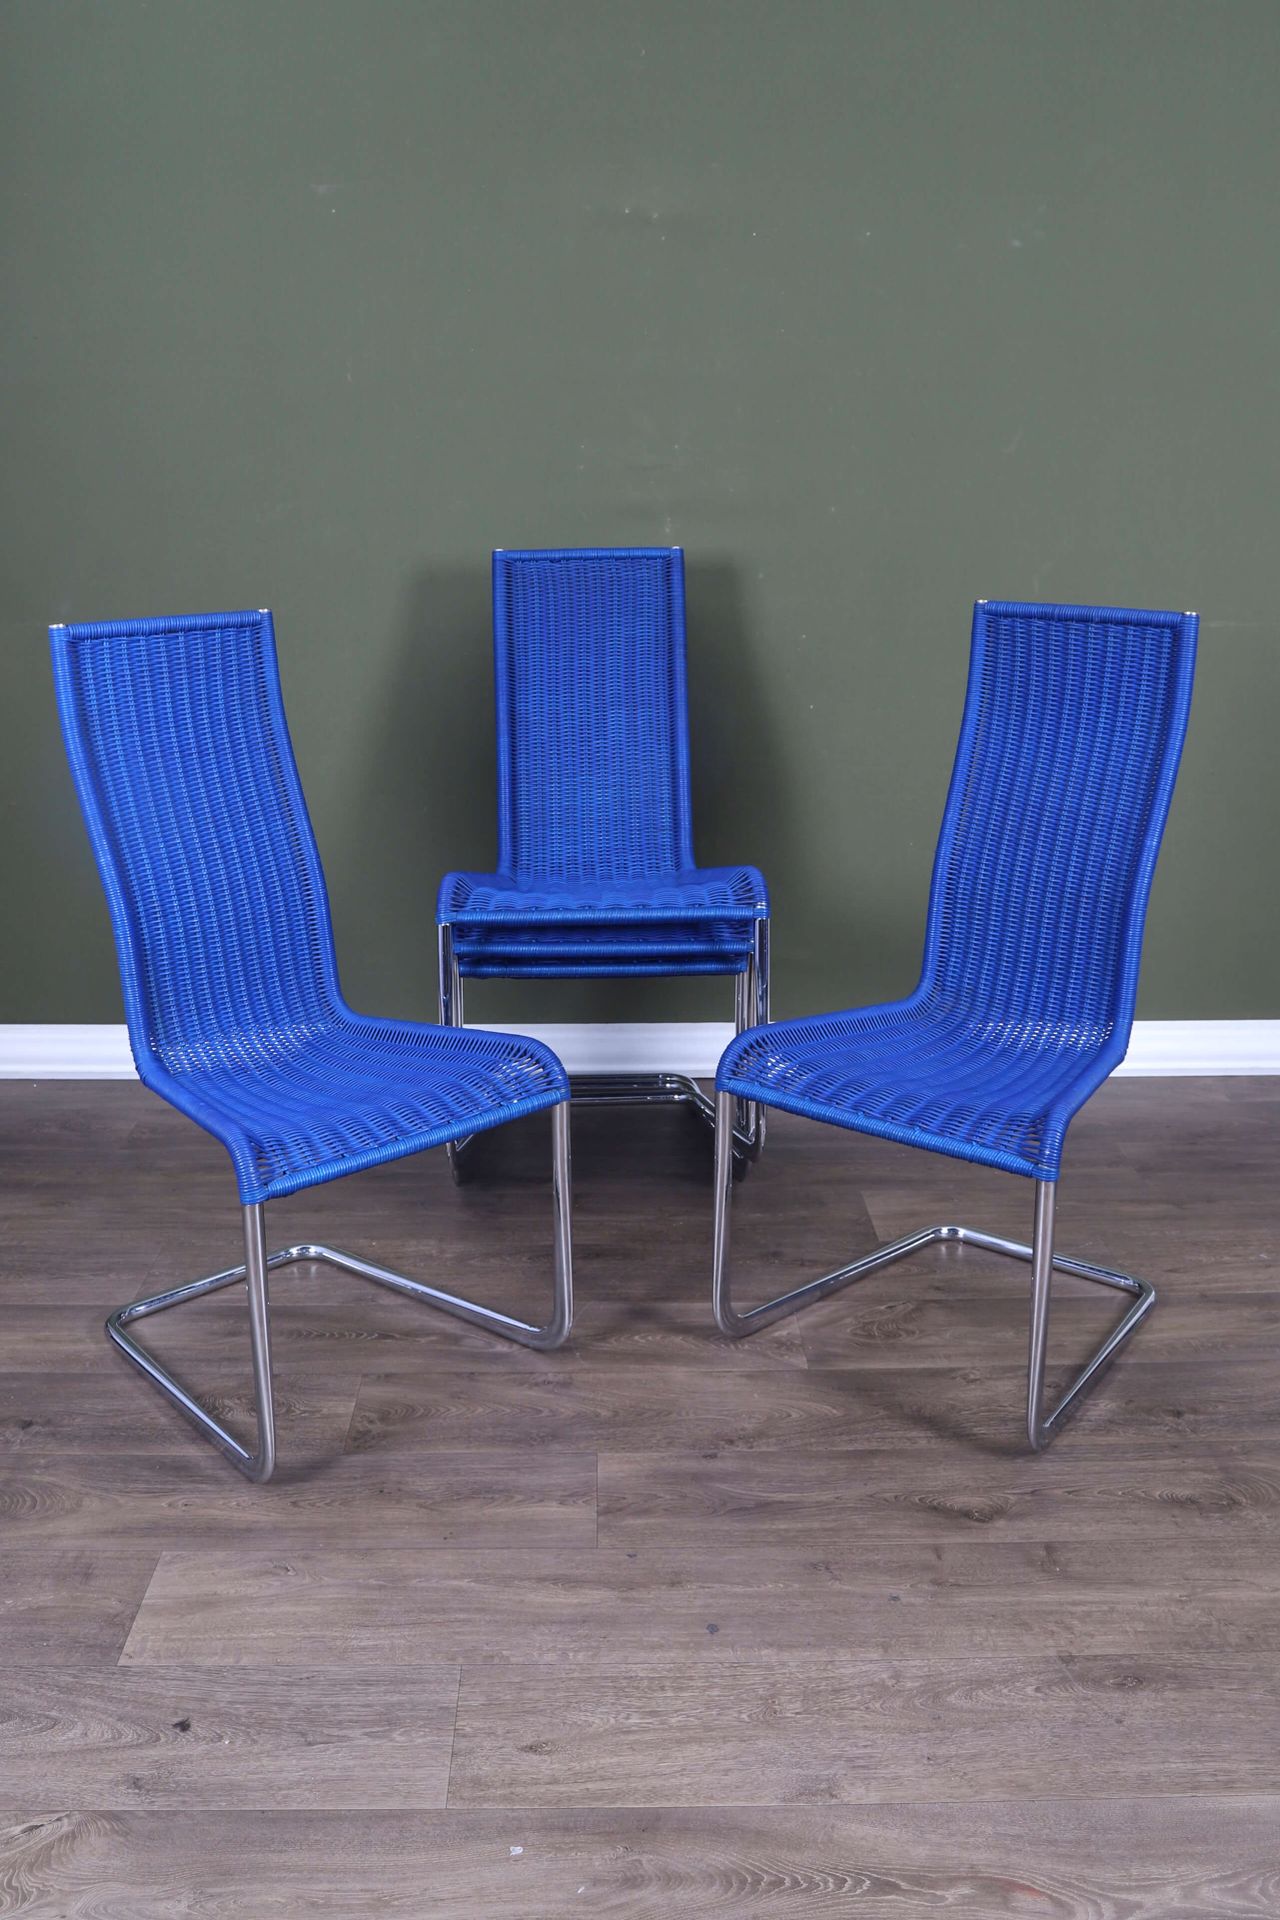 Tecta 一套6把B25椅子 镀铬管状钢脚和蓝色RAL 5005聚酯藤条

H.90 cm W. 50 cm D. 57 cm 状况报告：一把椅子的座位有磨损